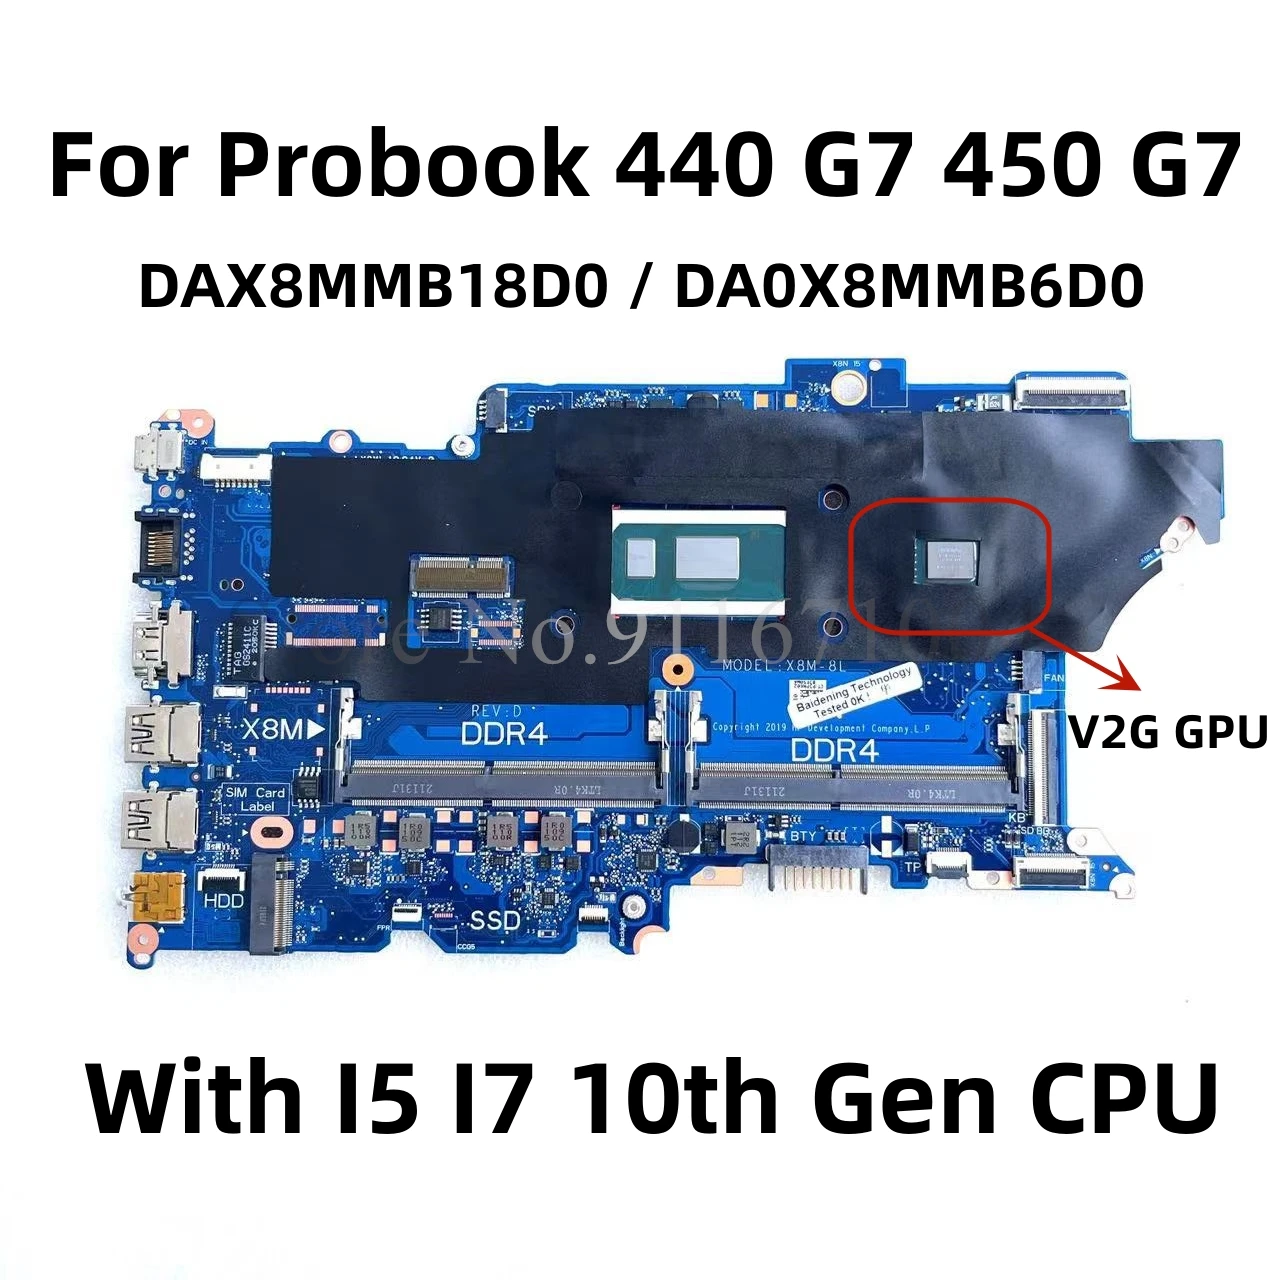 

DAX8MMB18D0 DA0X8MMB6D0 X8M-8L Mainboard For HP Probook 440 G7 450 G7 Laptop Motherboard With I5 I7 10th Gen CPU V2G GPU DDR4